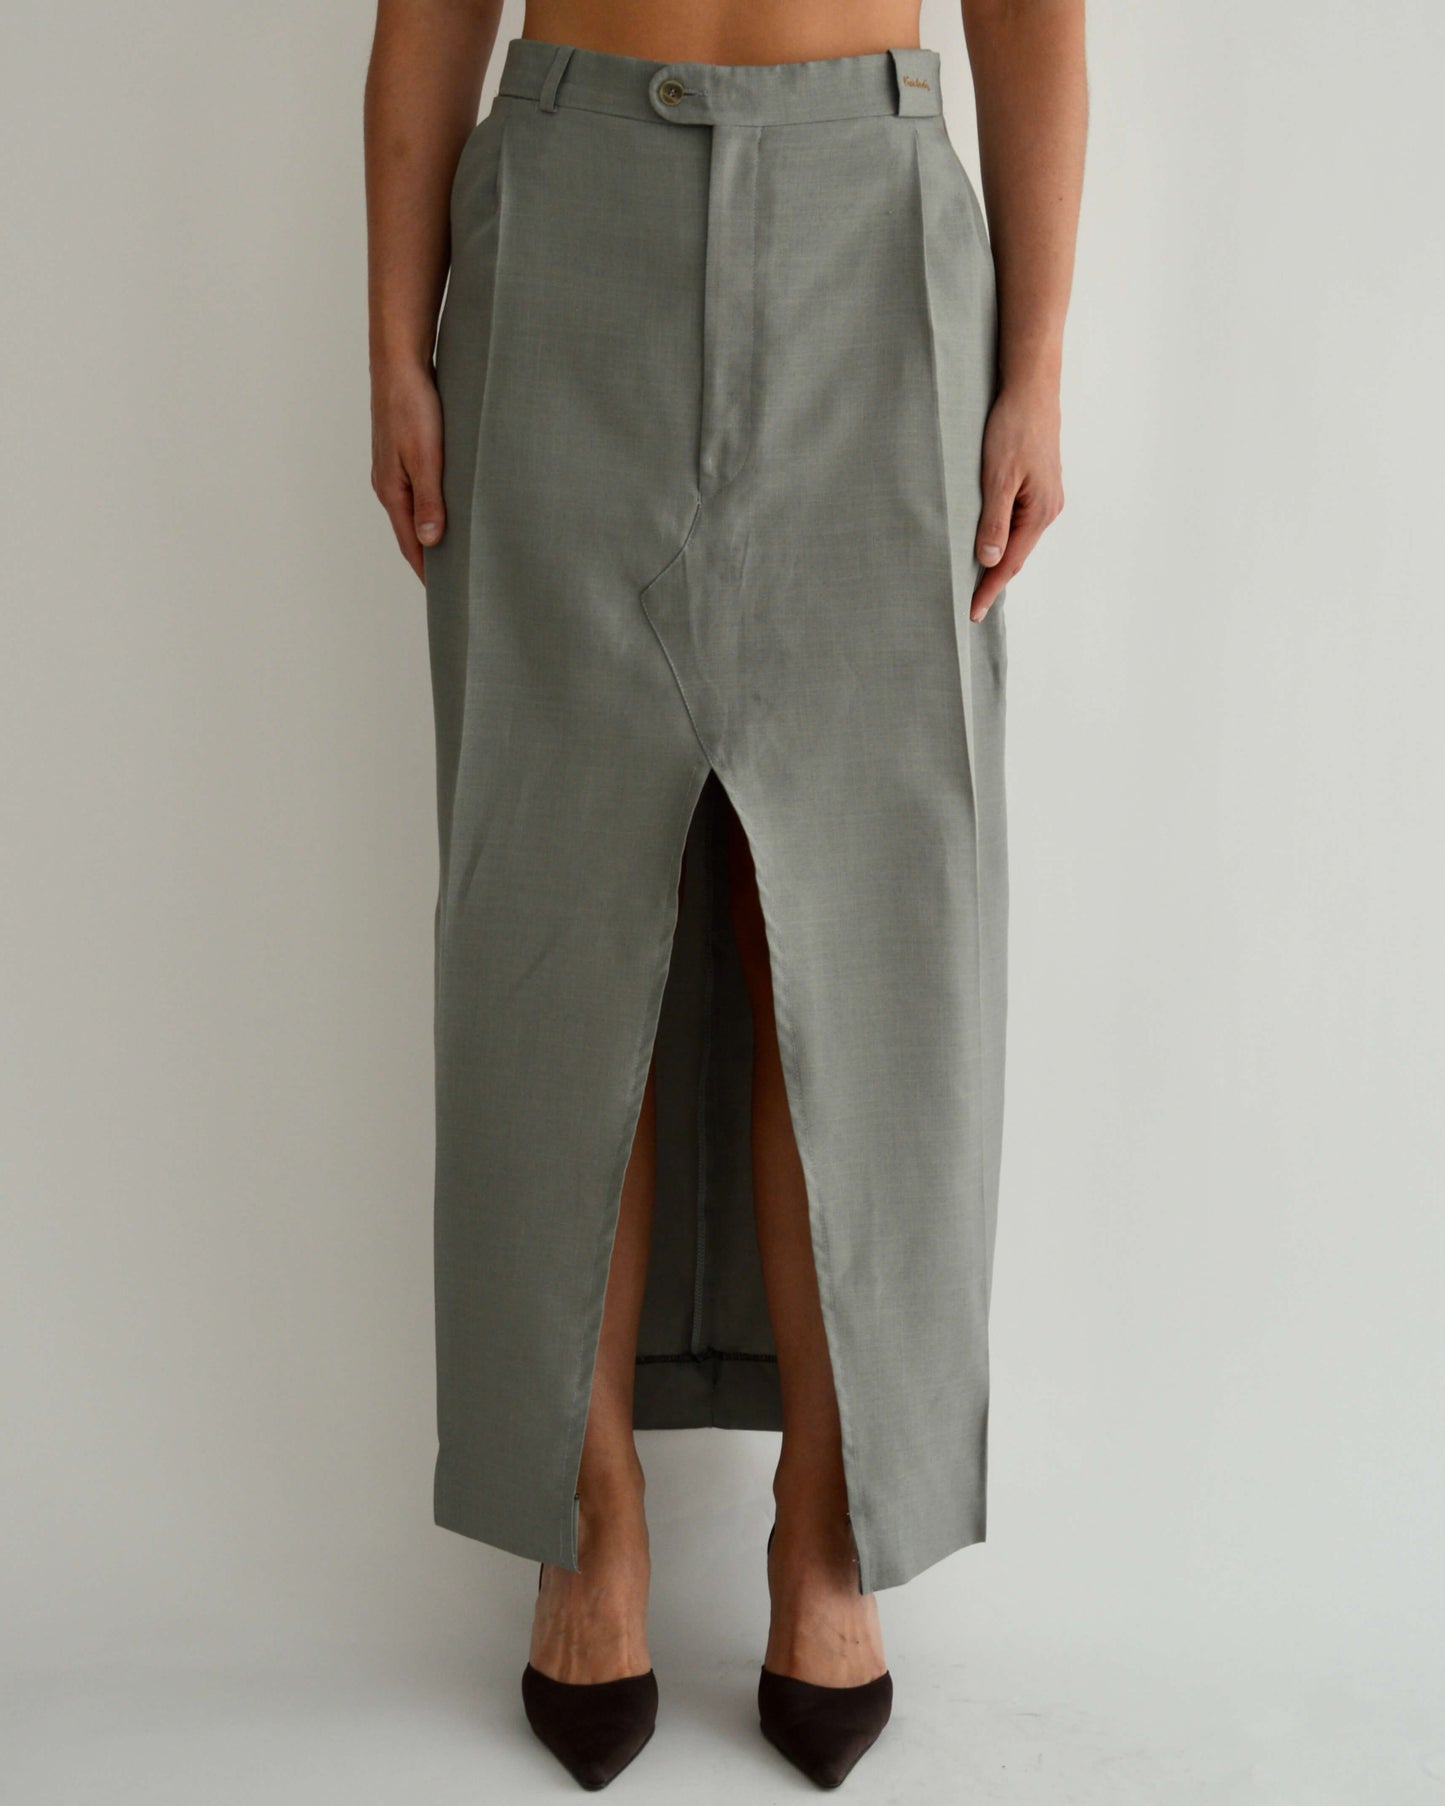 Vegan Long Skirt - P. C. Green (M/L)